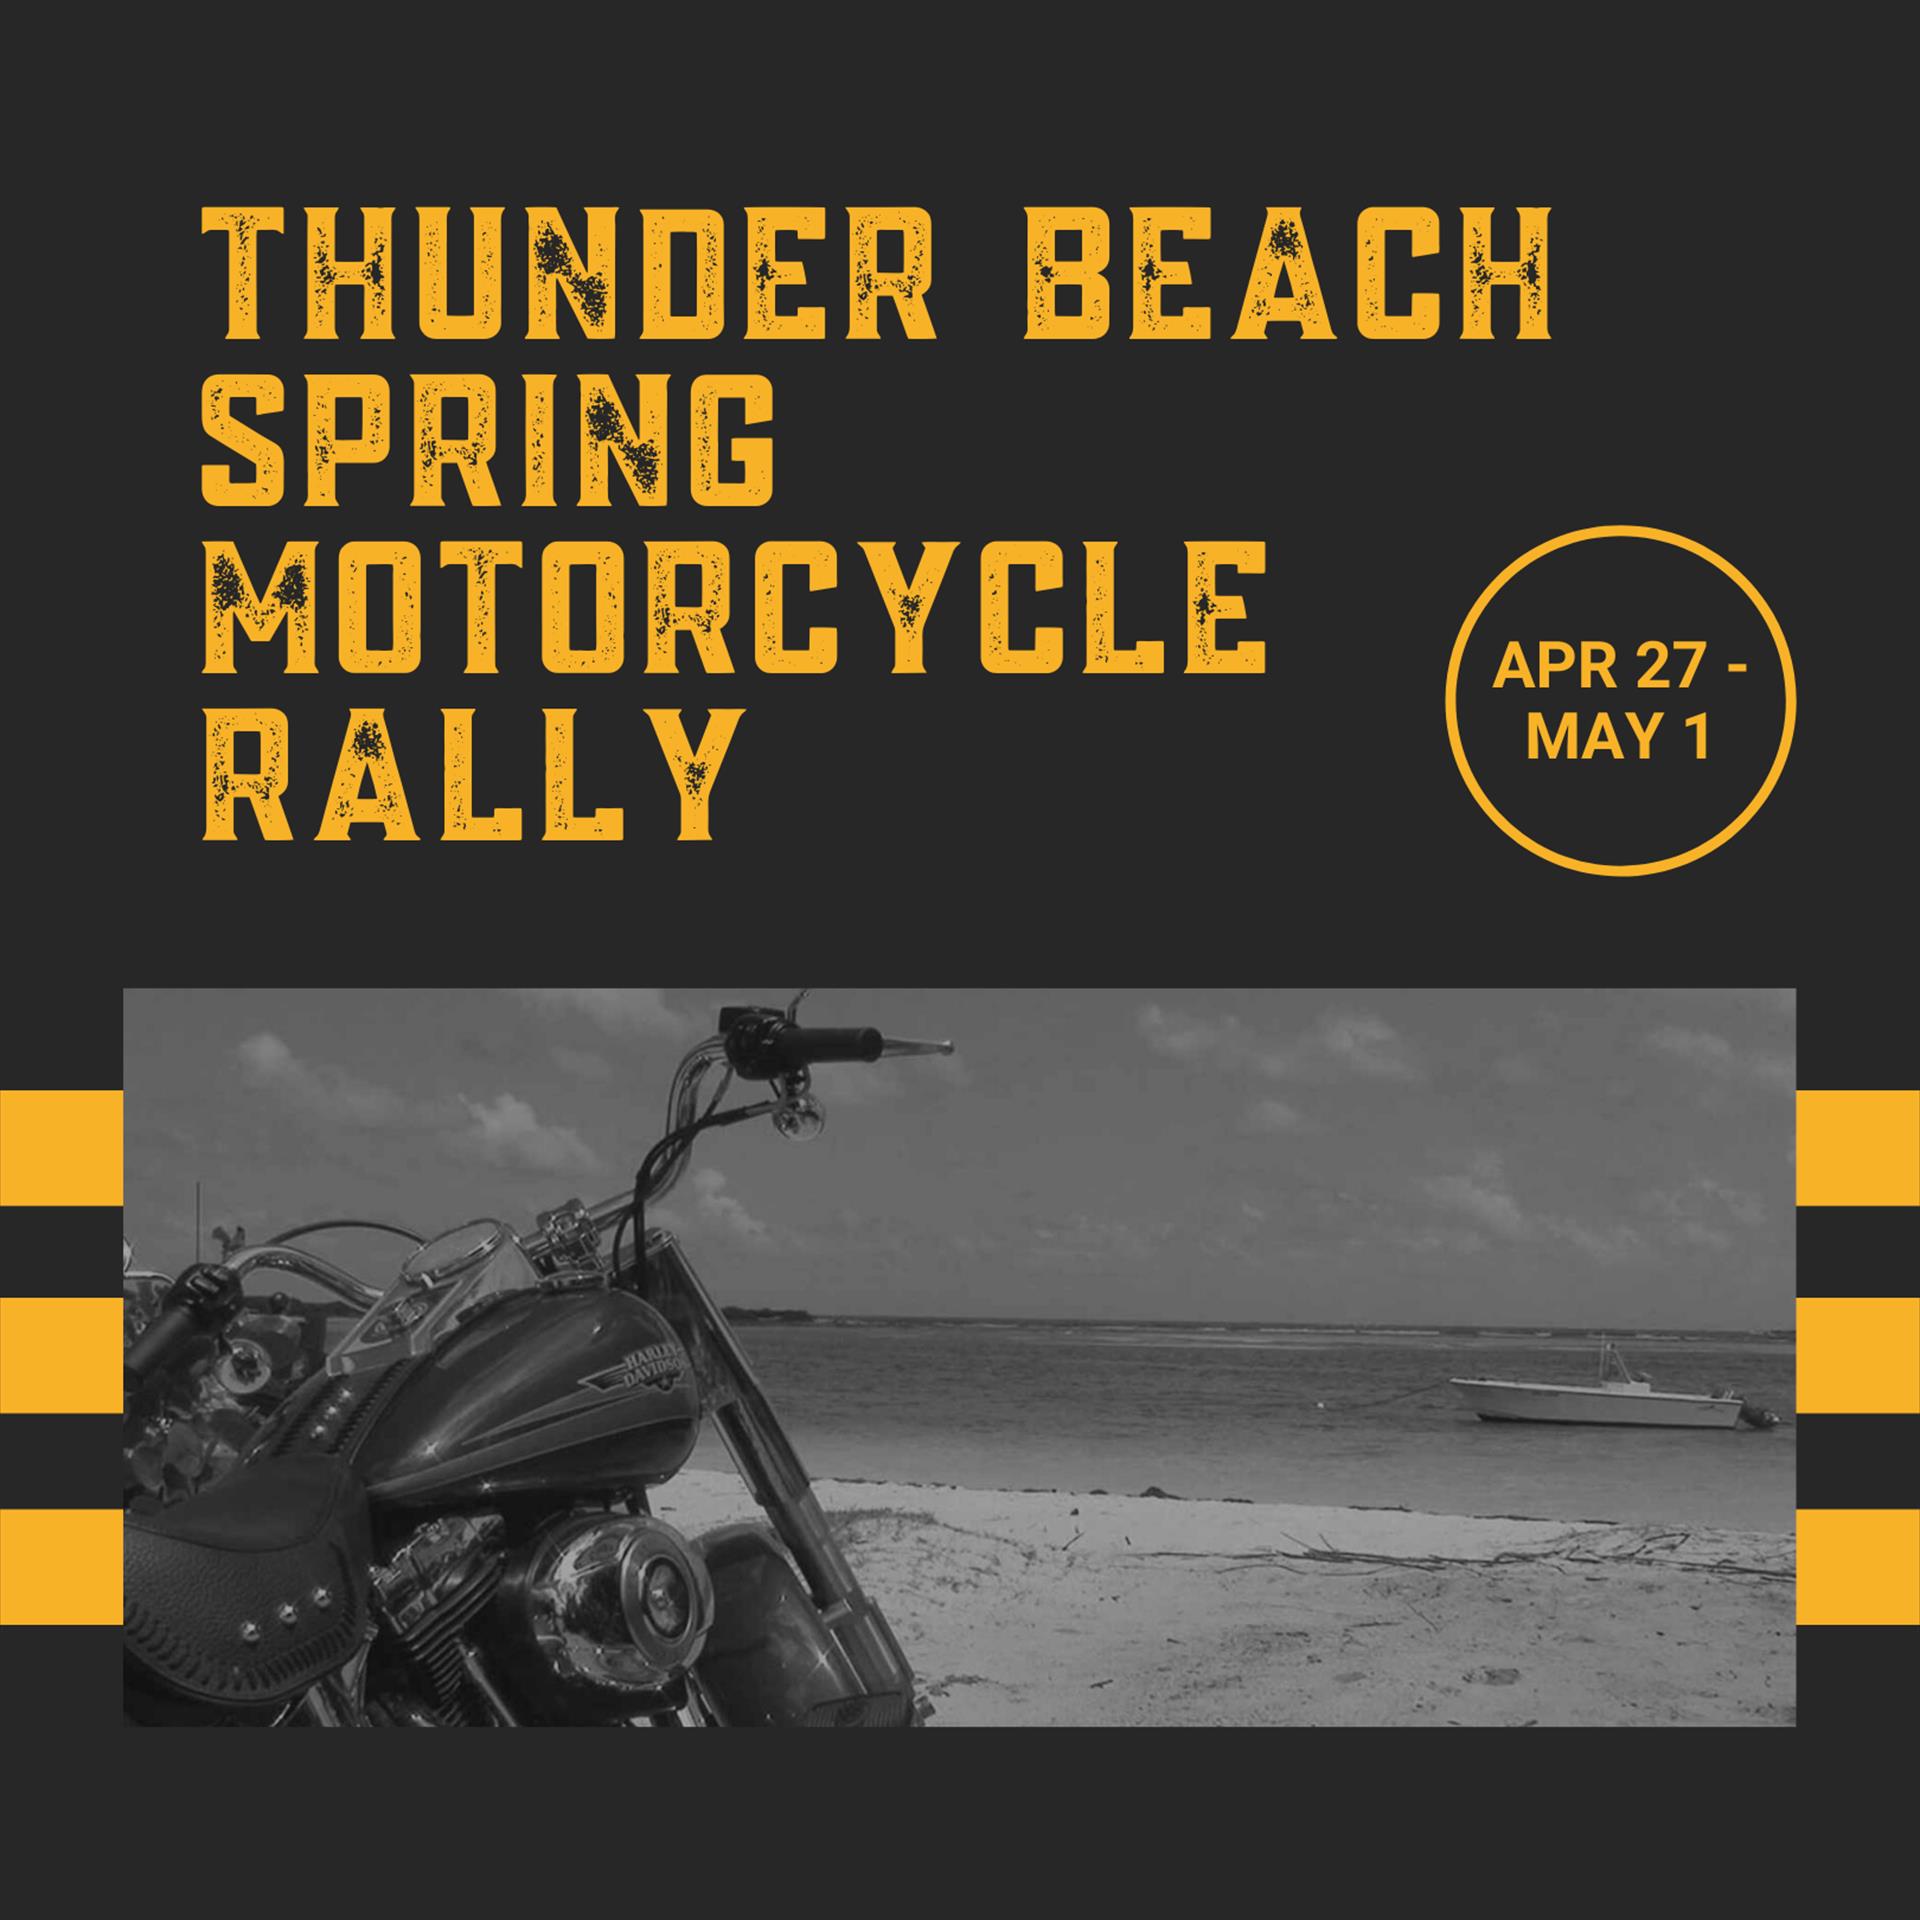 thunder beach motorcycle rally